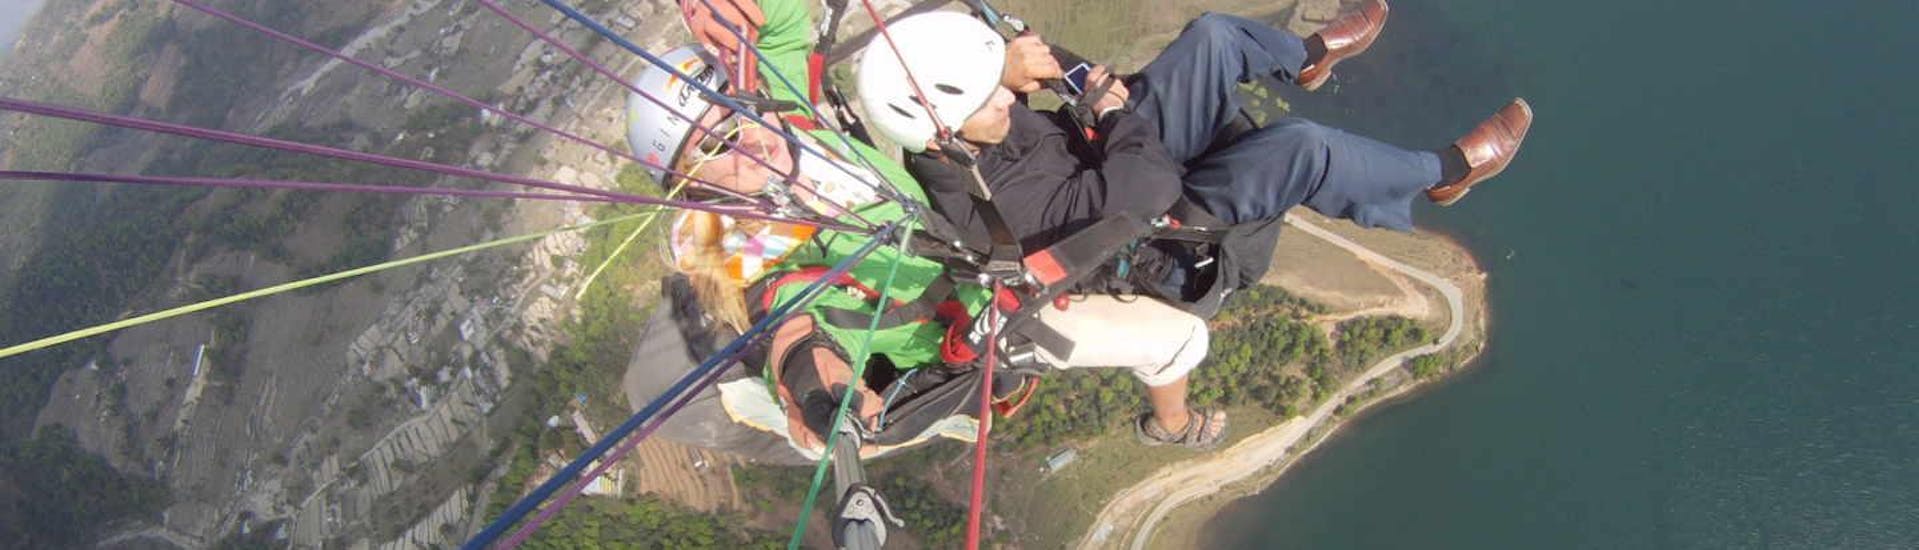 Tandem Paragliding "Flug am See" - Latium.